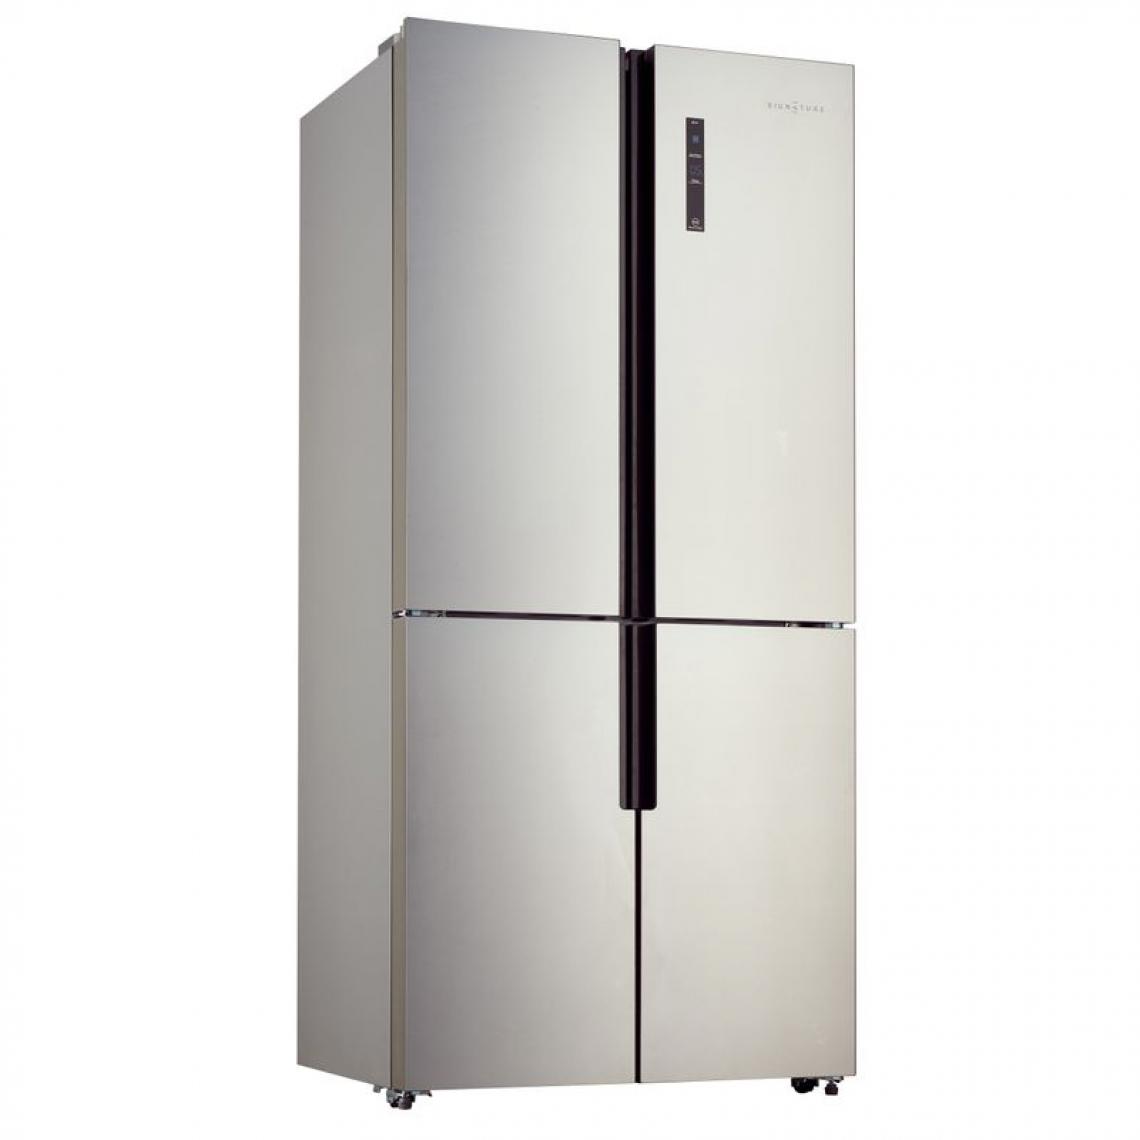 Signature - Réfrigérateur américain SIGNATURE SFDOOR482BGNF 482L Miroir - Réfrigérateur américain